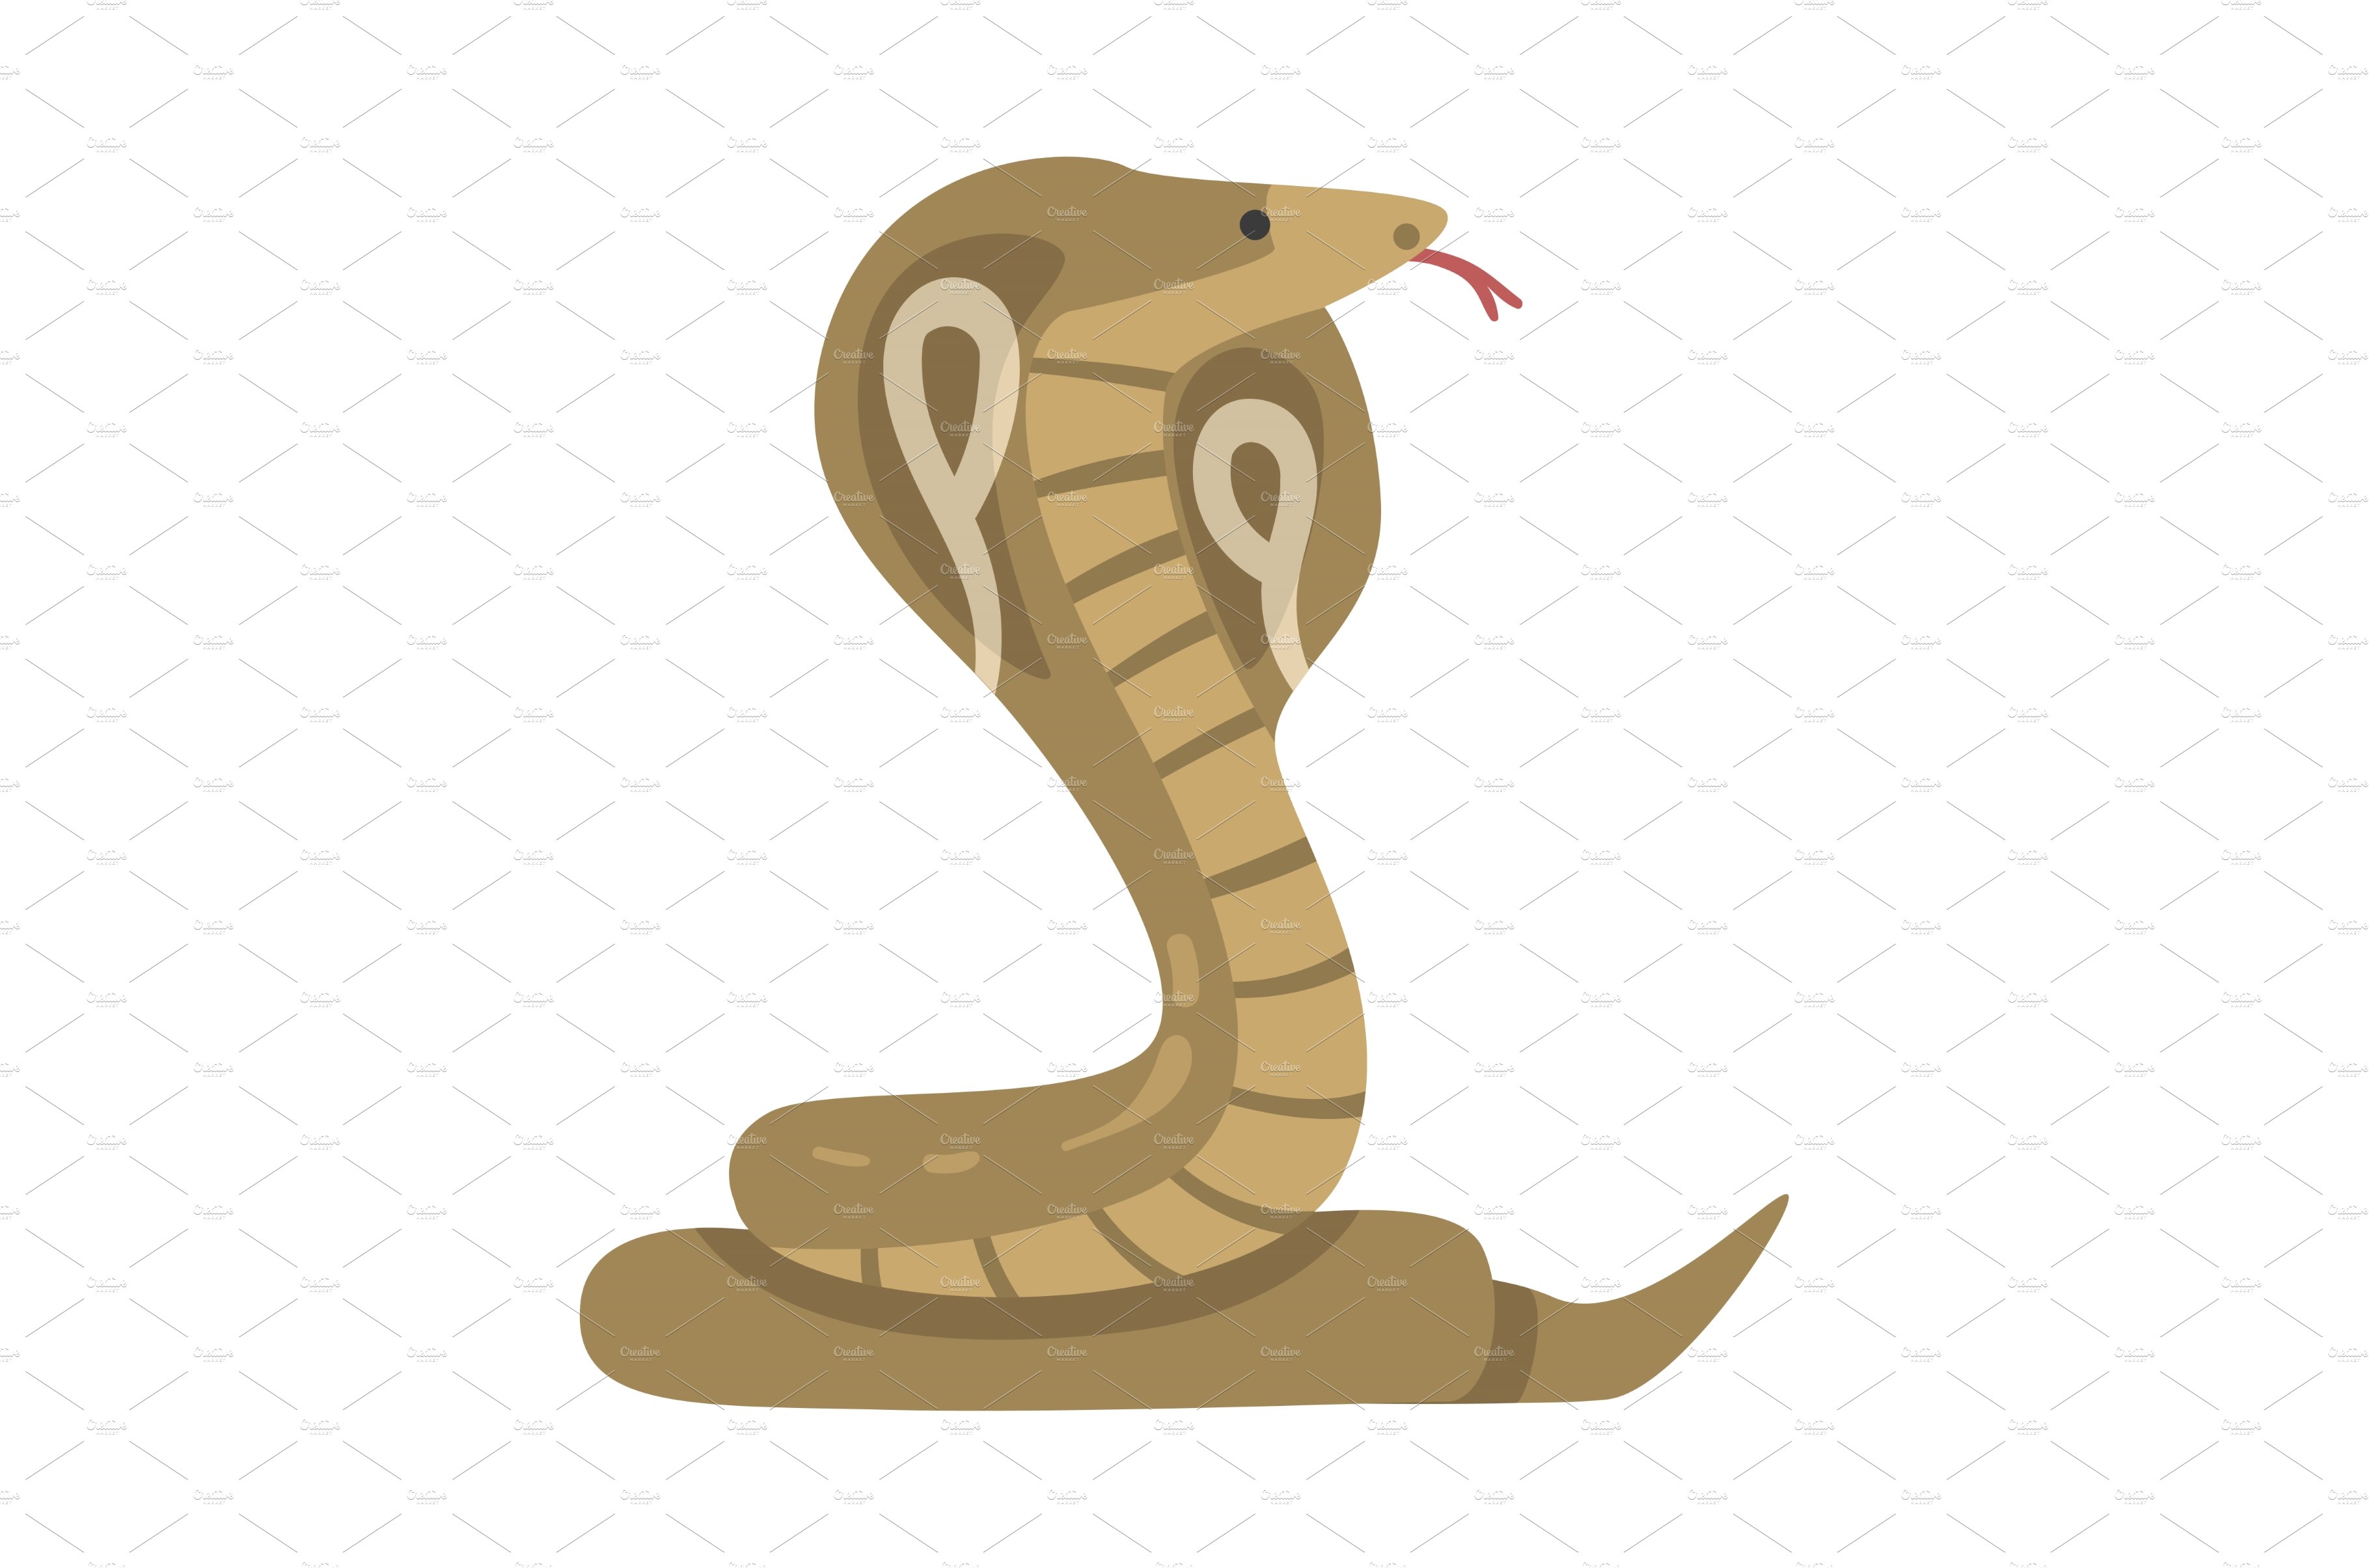 Cobra African Snake, King Cobra cover image.